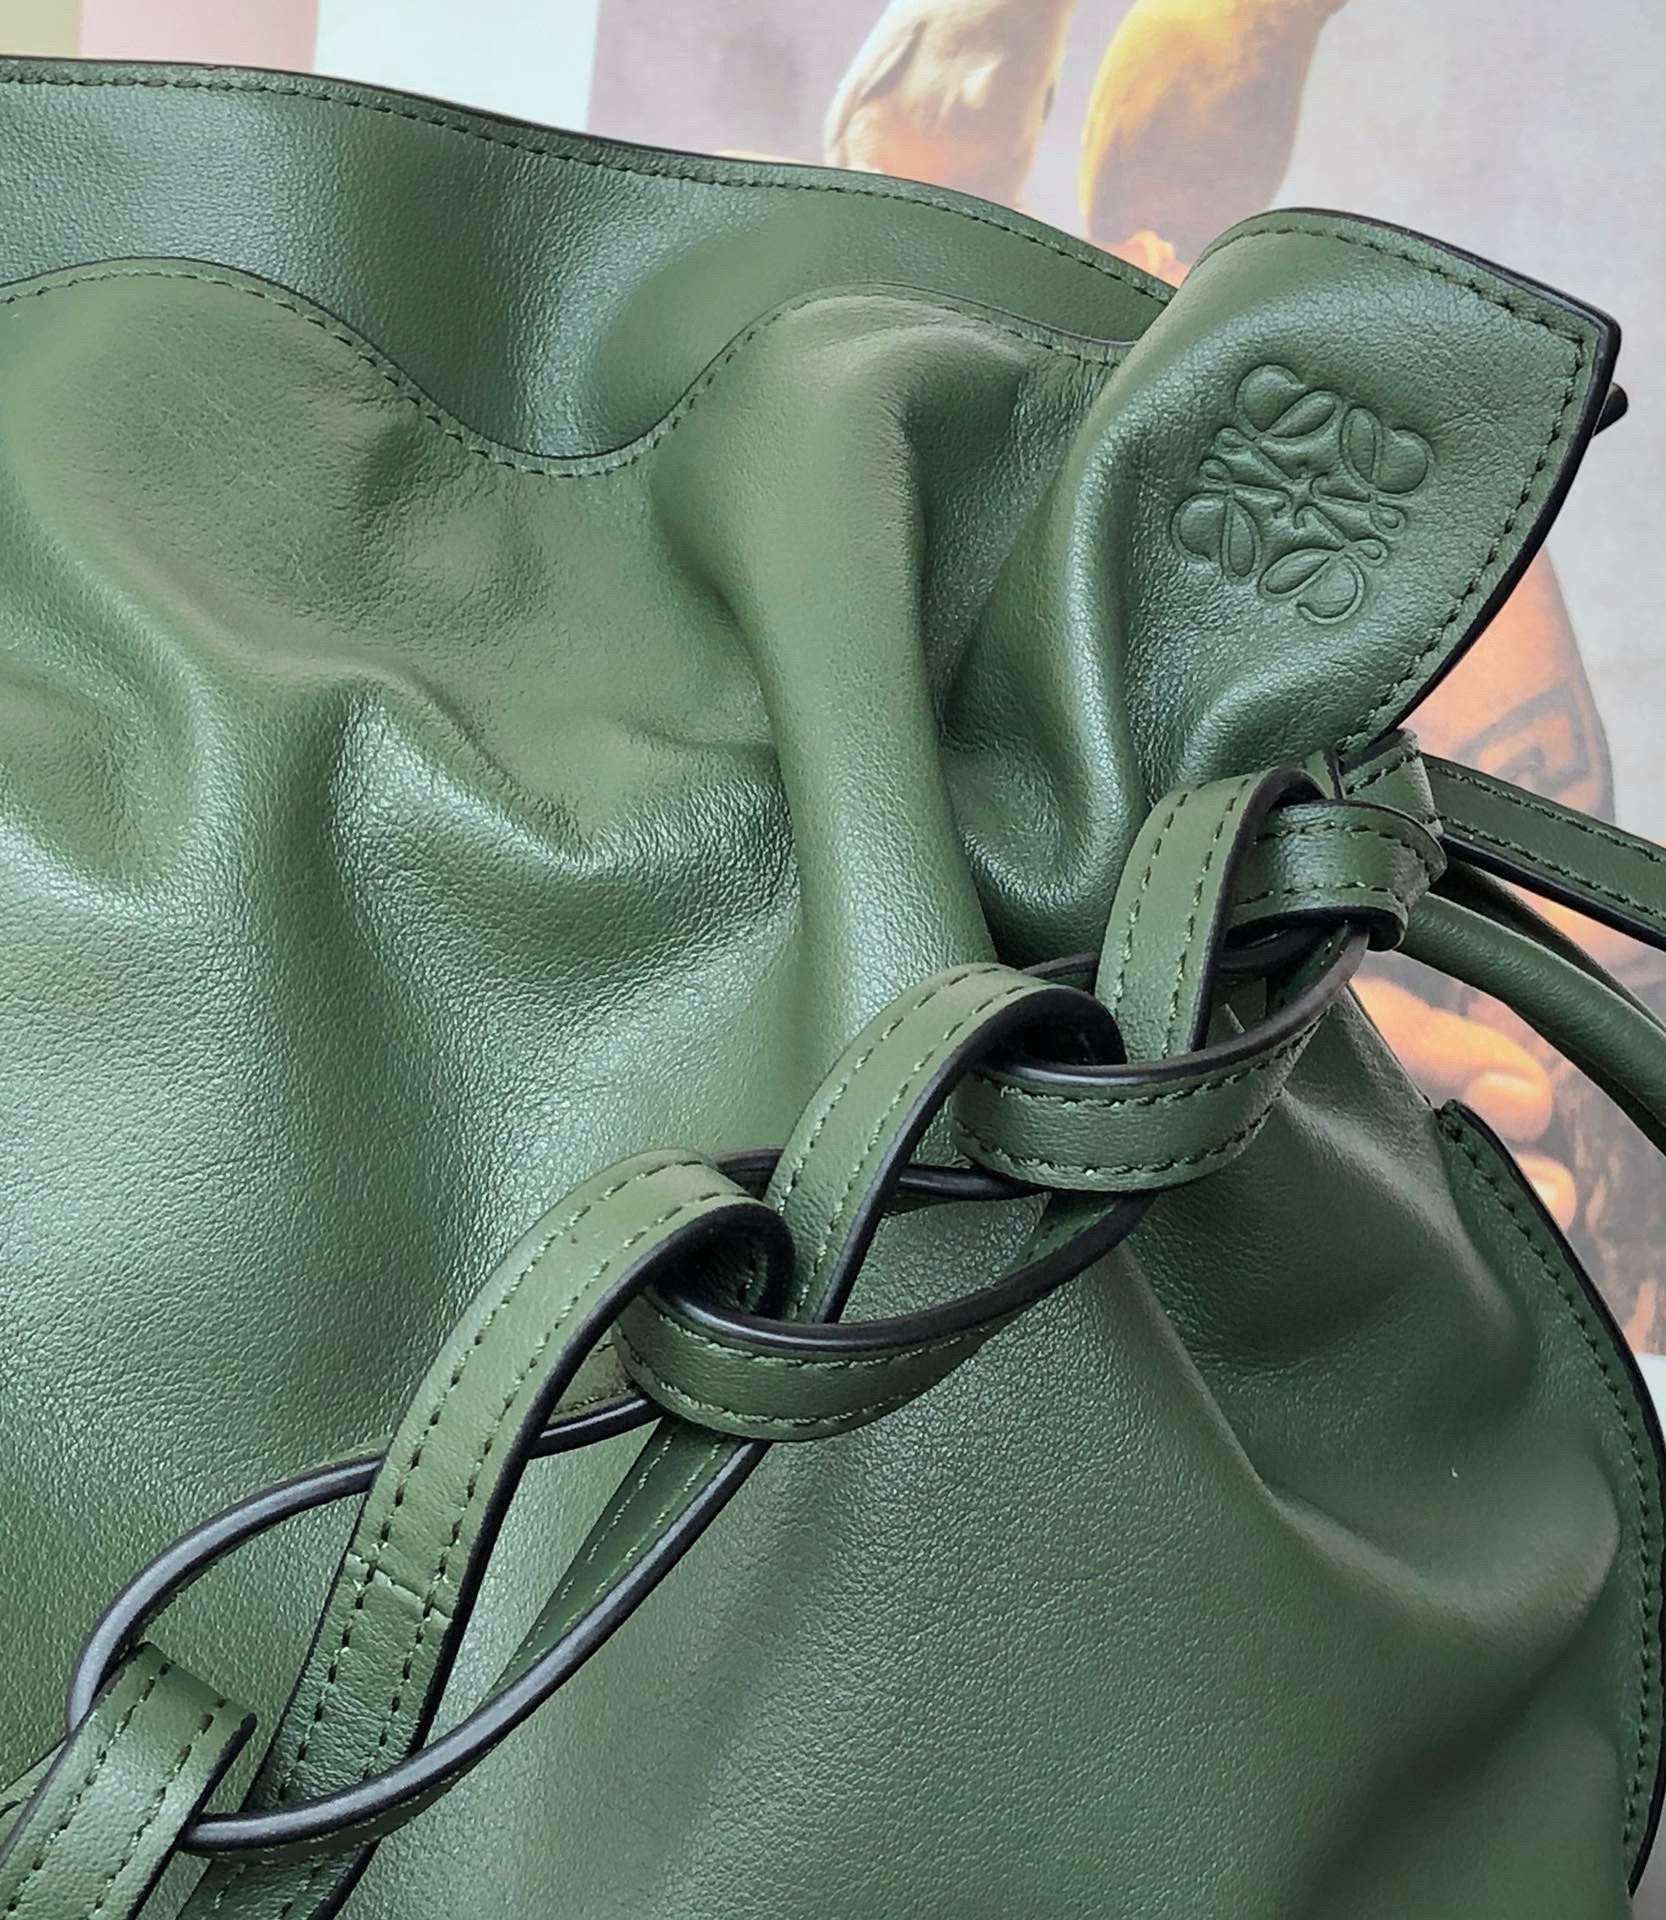 Loewe Flamenco Clutch Bag Original Leather LE0556 Dark green